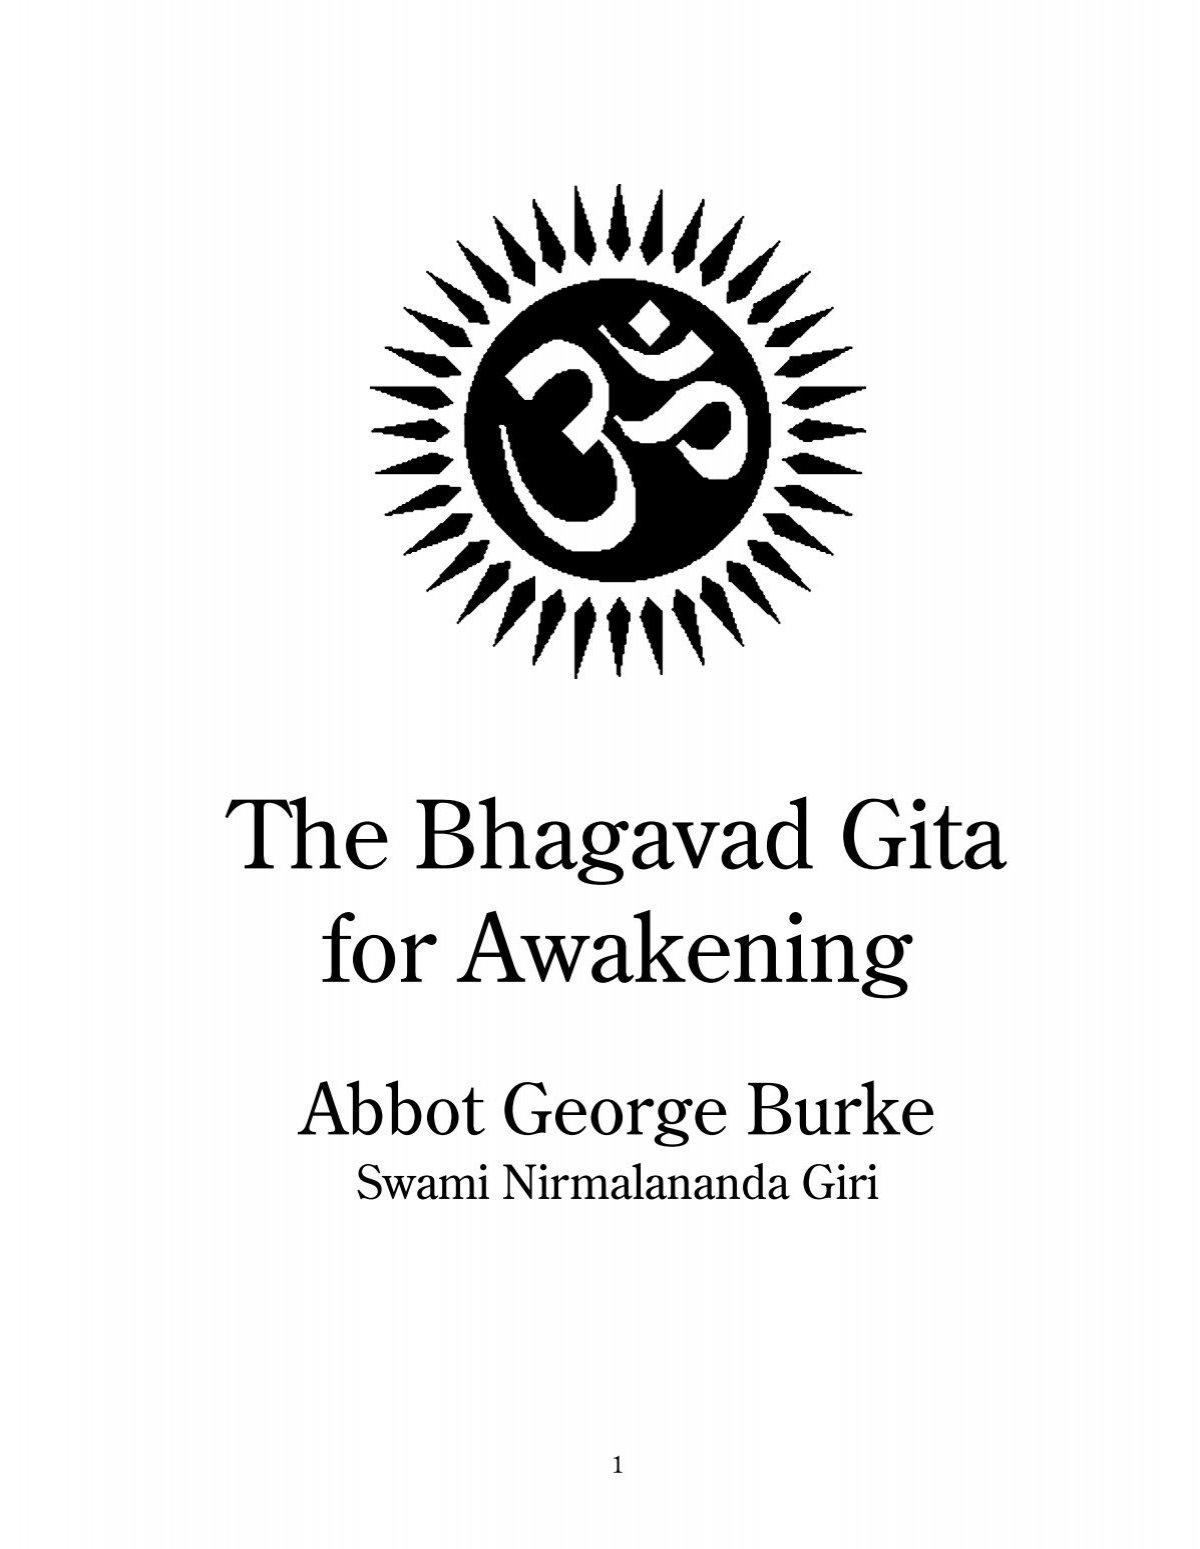 Lectures On Bhagavad Gita By Swami Vivekananda Pdf